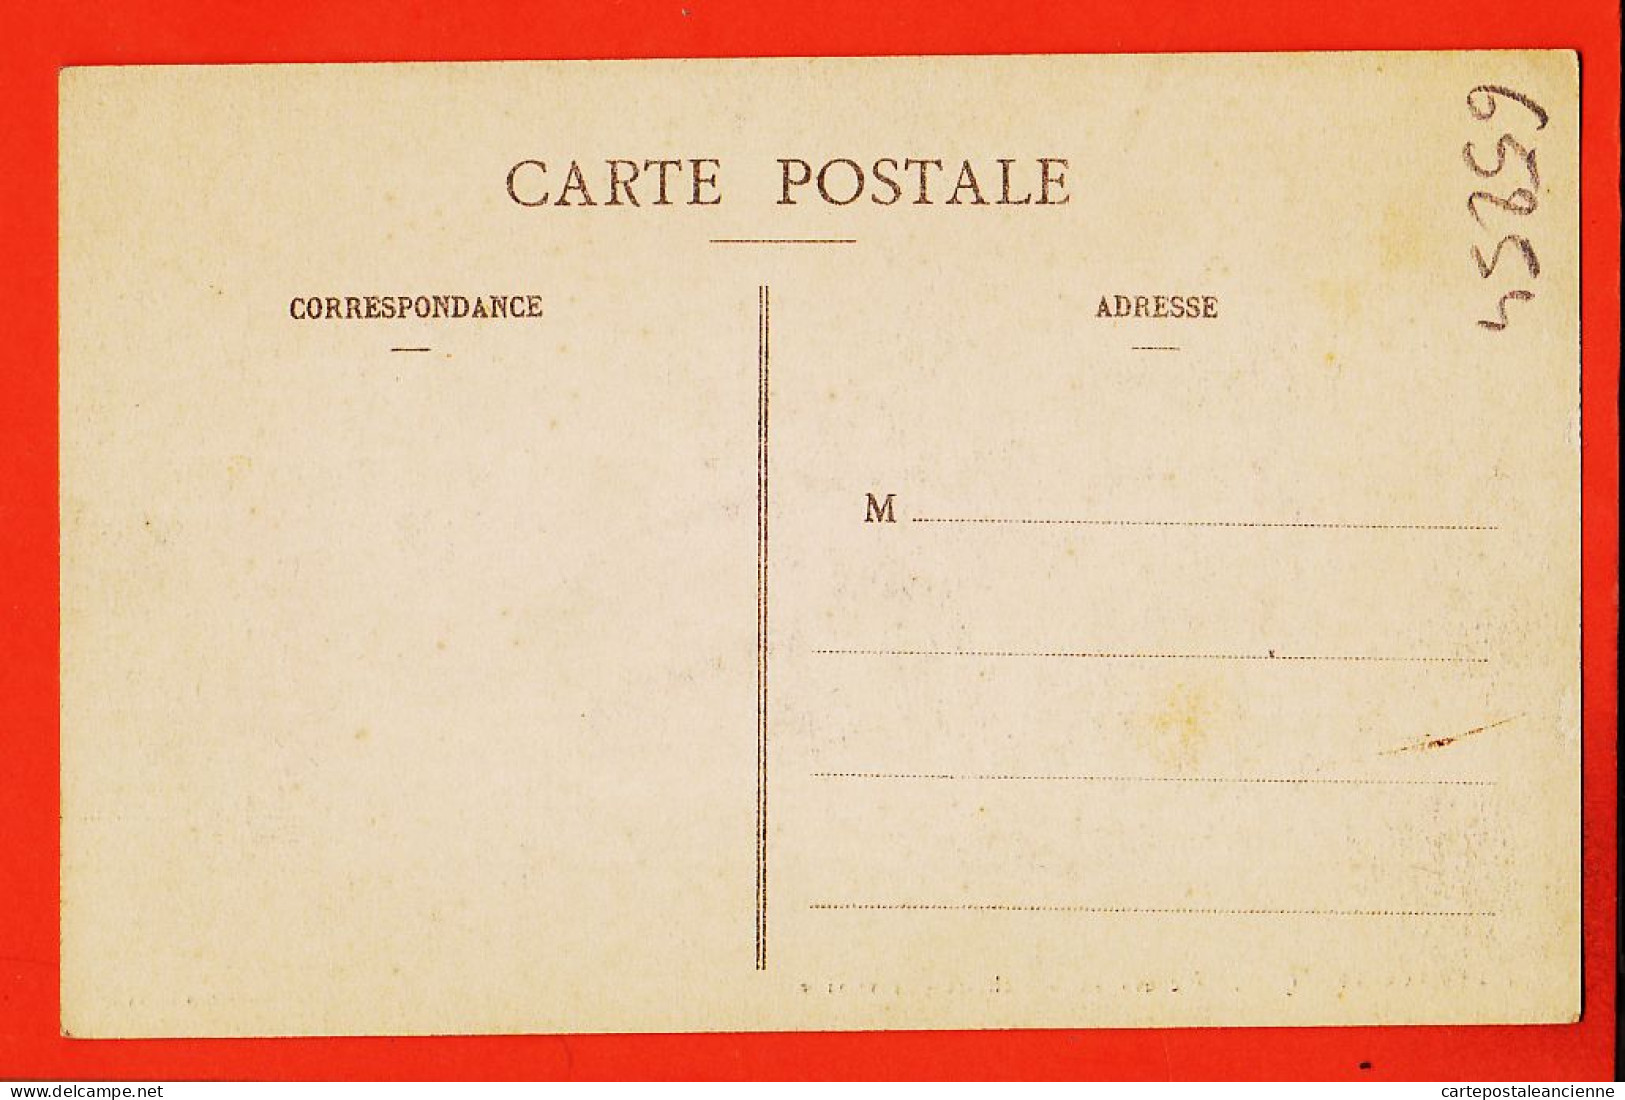 32586 / ⭐ (•◡•) BRAZZAVILLE Congo Français ◉ A Cheval Sur Une Chèvre ◉ Collection LERAY 16 - French Congo